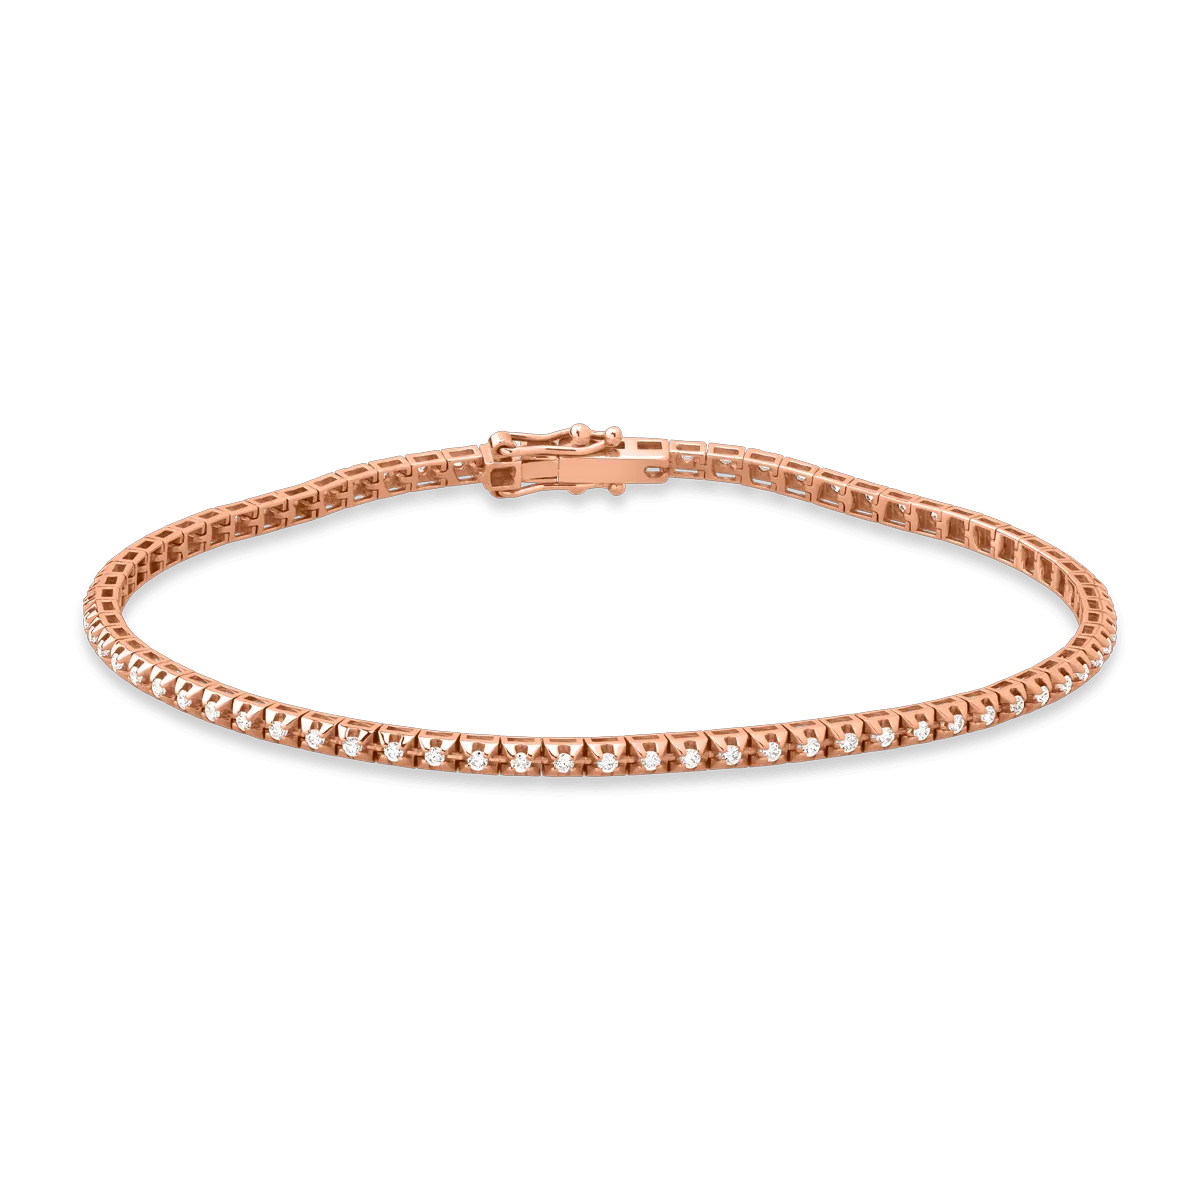 18K rose gold tennis bracelet with 1ct diamonds